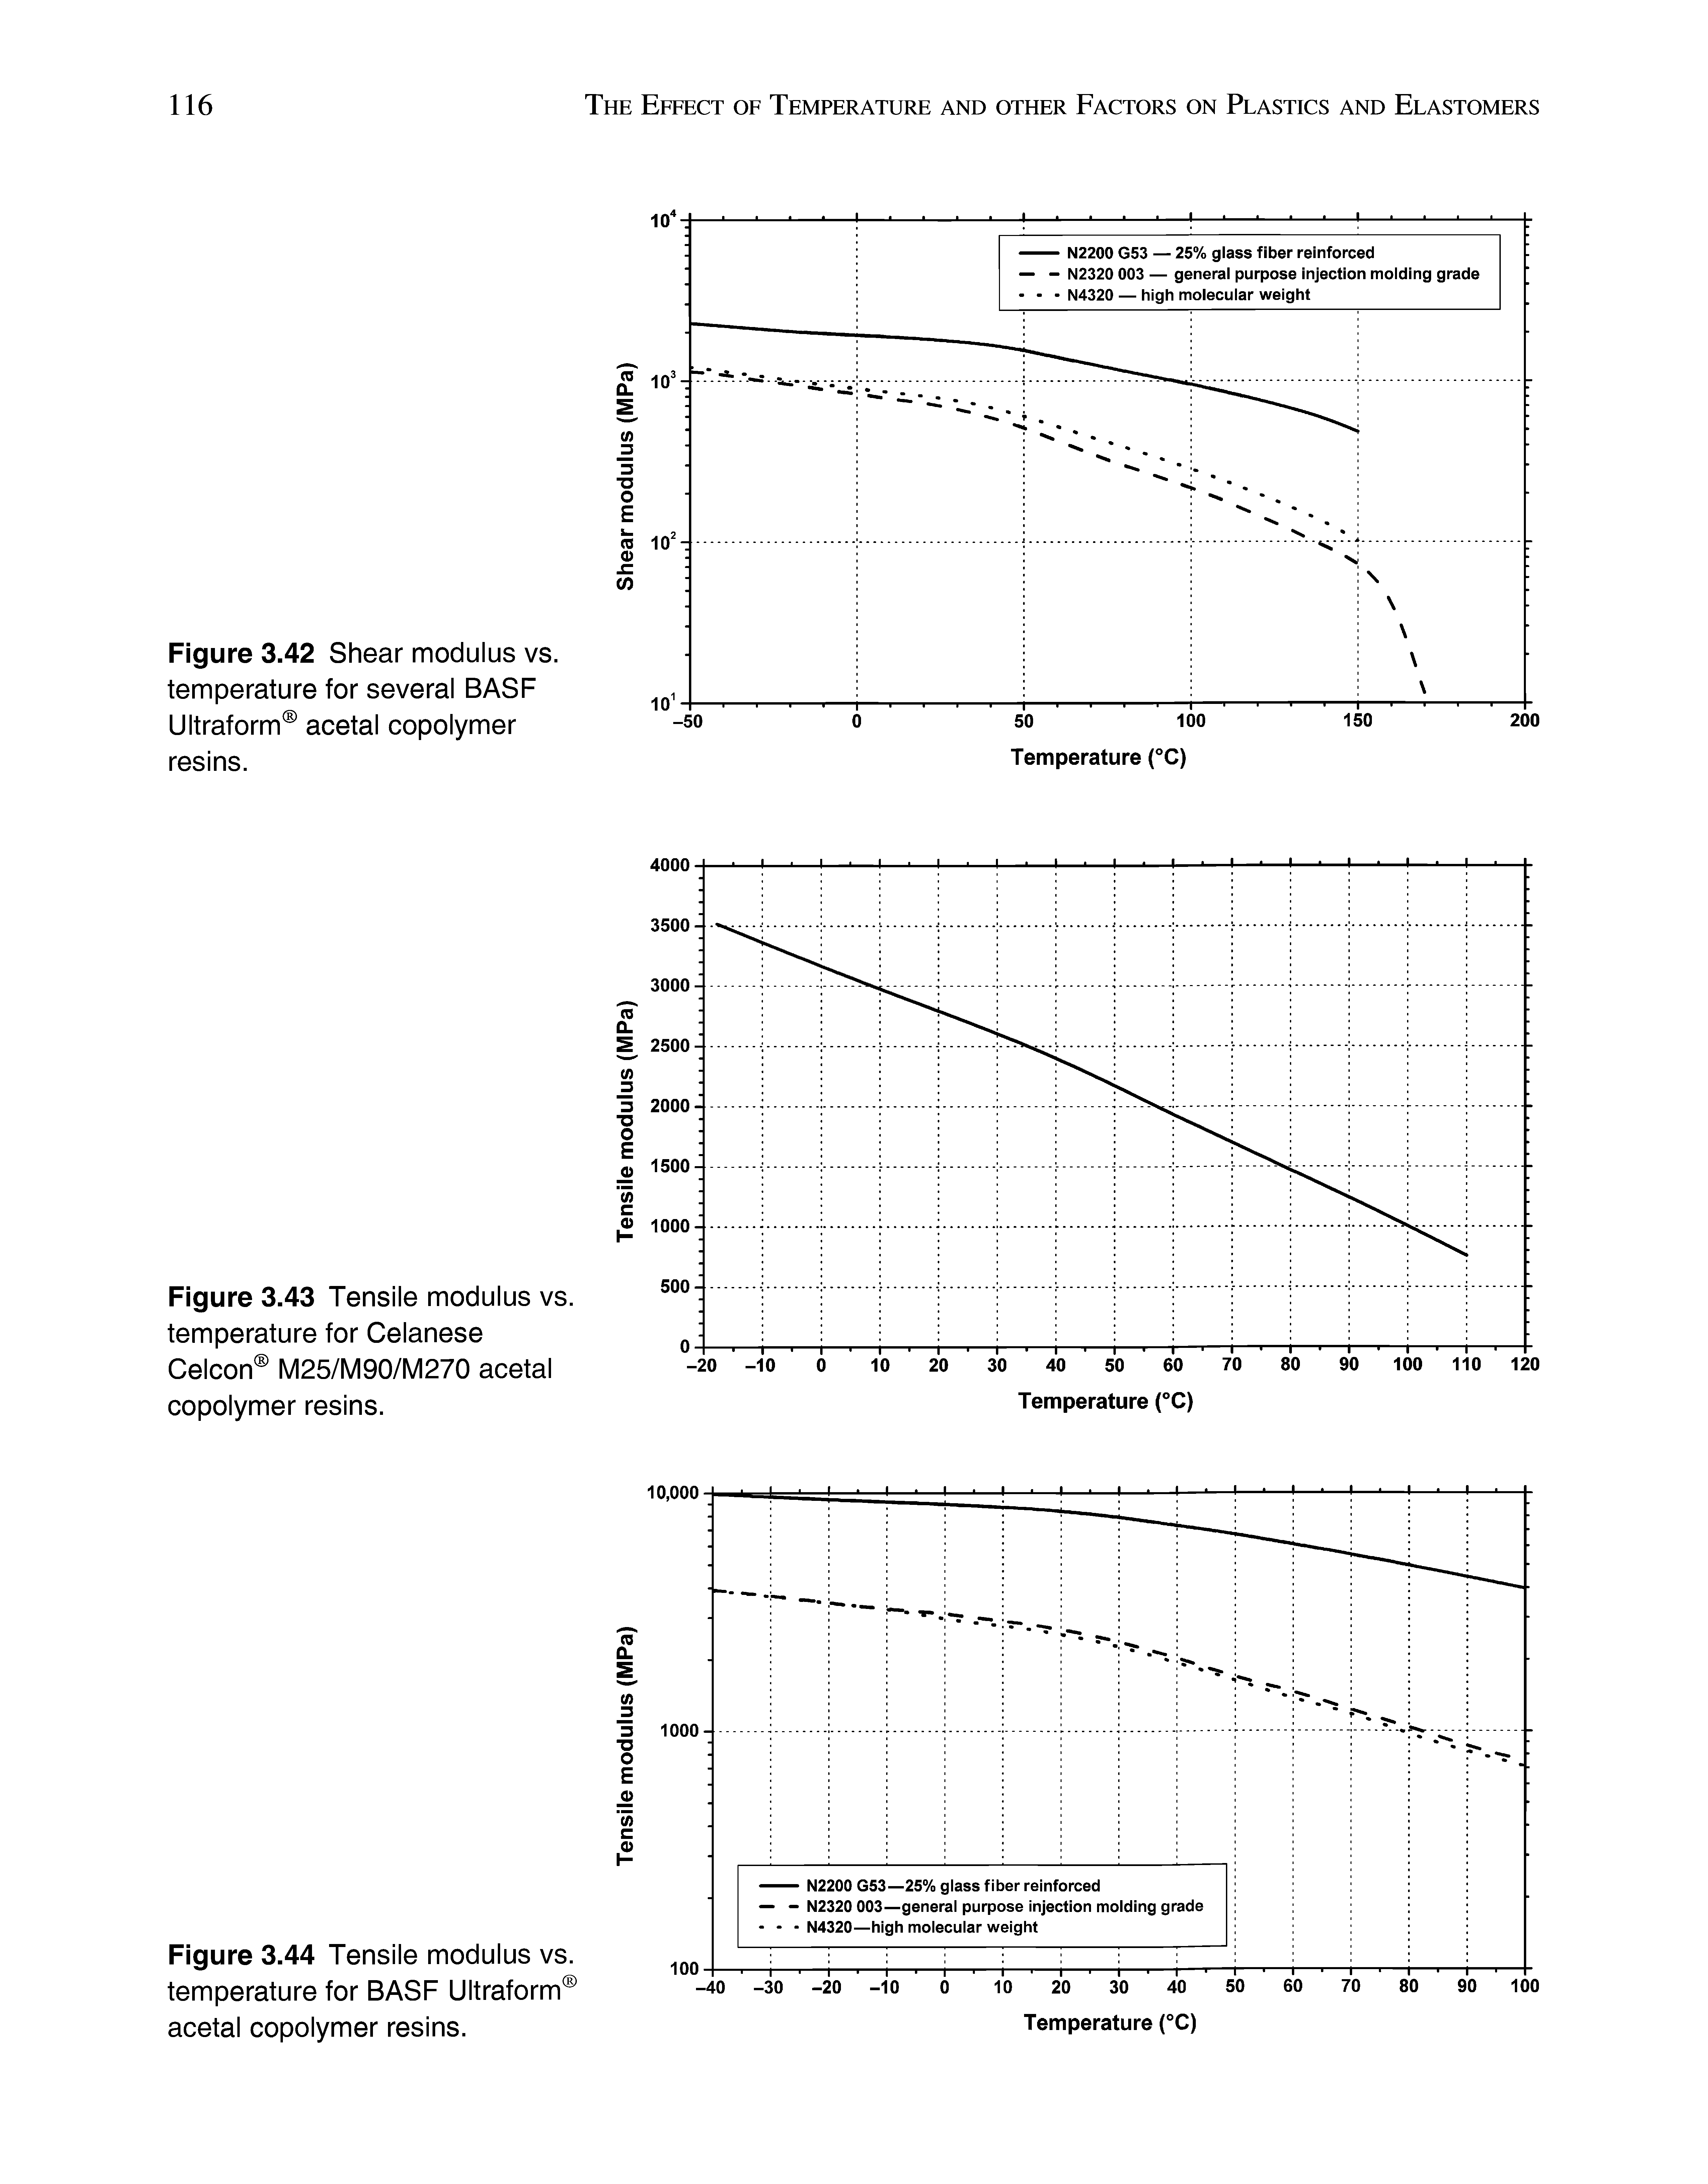 Figure 3.42 Shear modulus vs. temperature for several BASF Ultraform acetal copolymer resins.